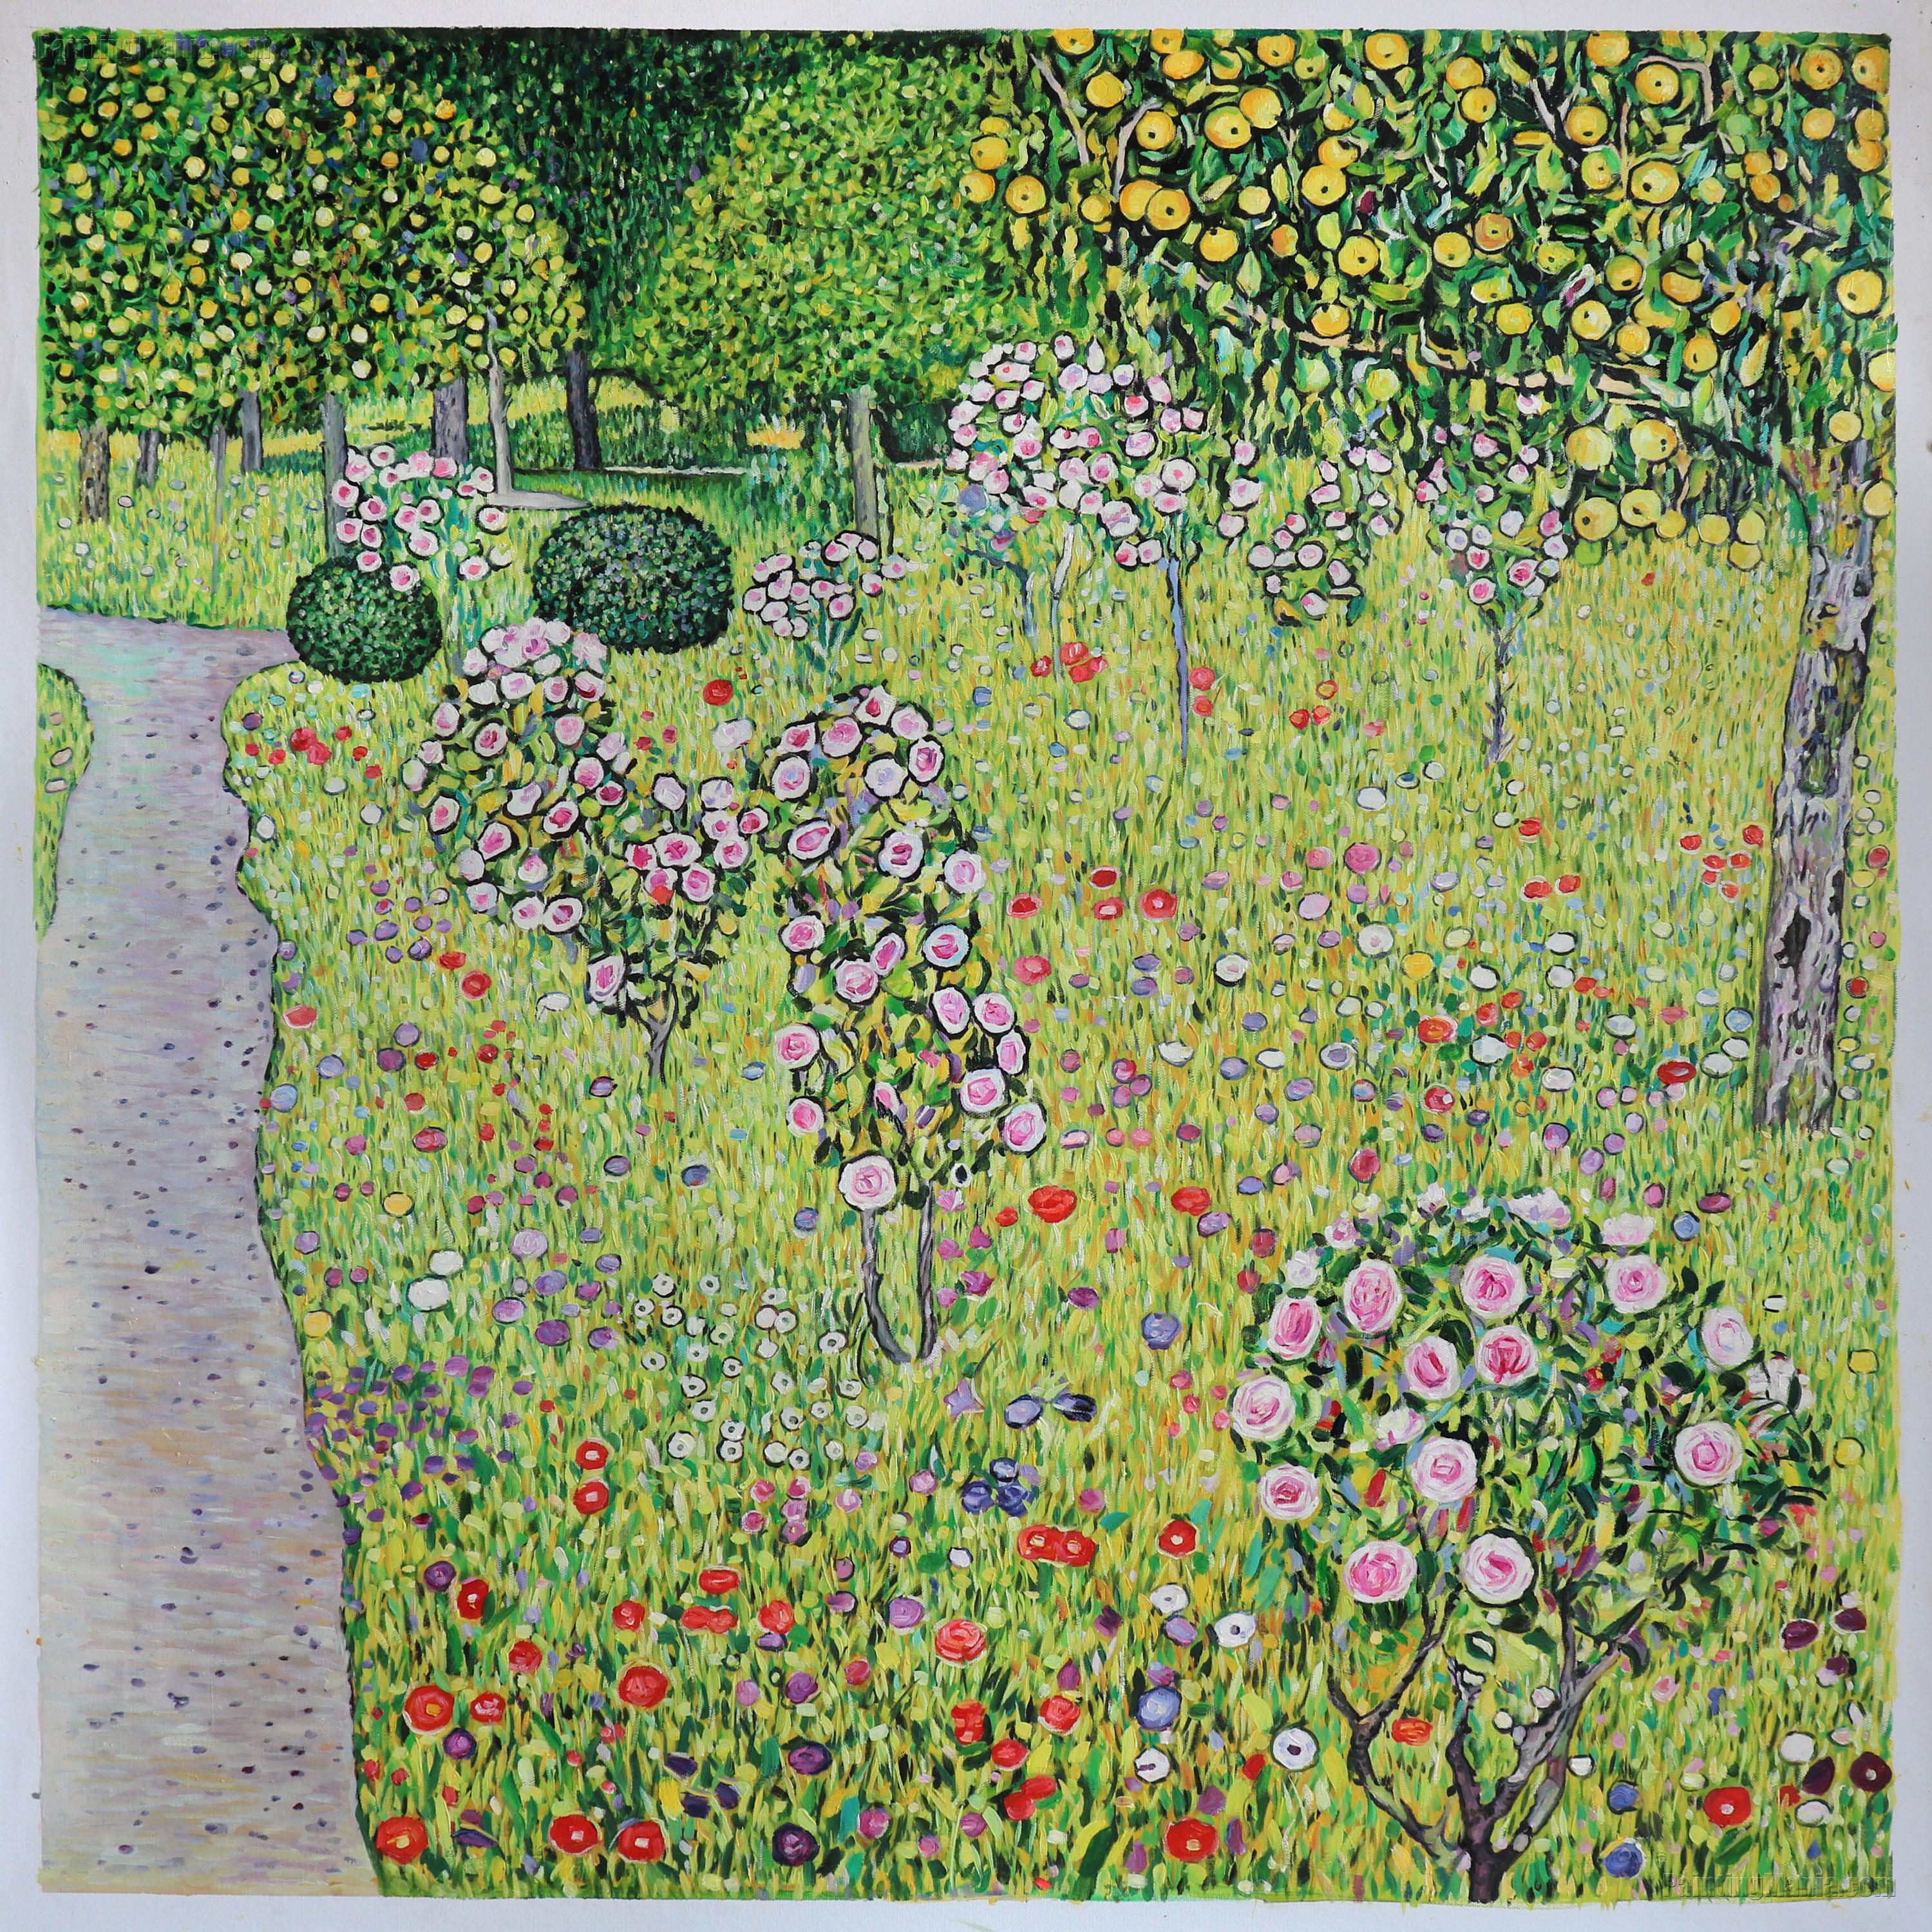 Orchard with Roses (Obstgarten mit Rosen)